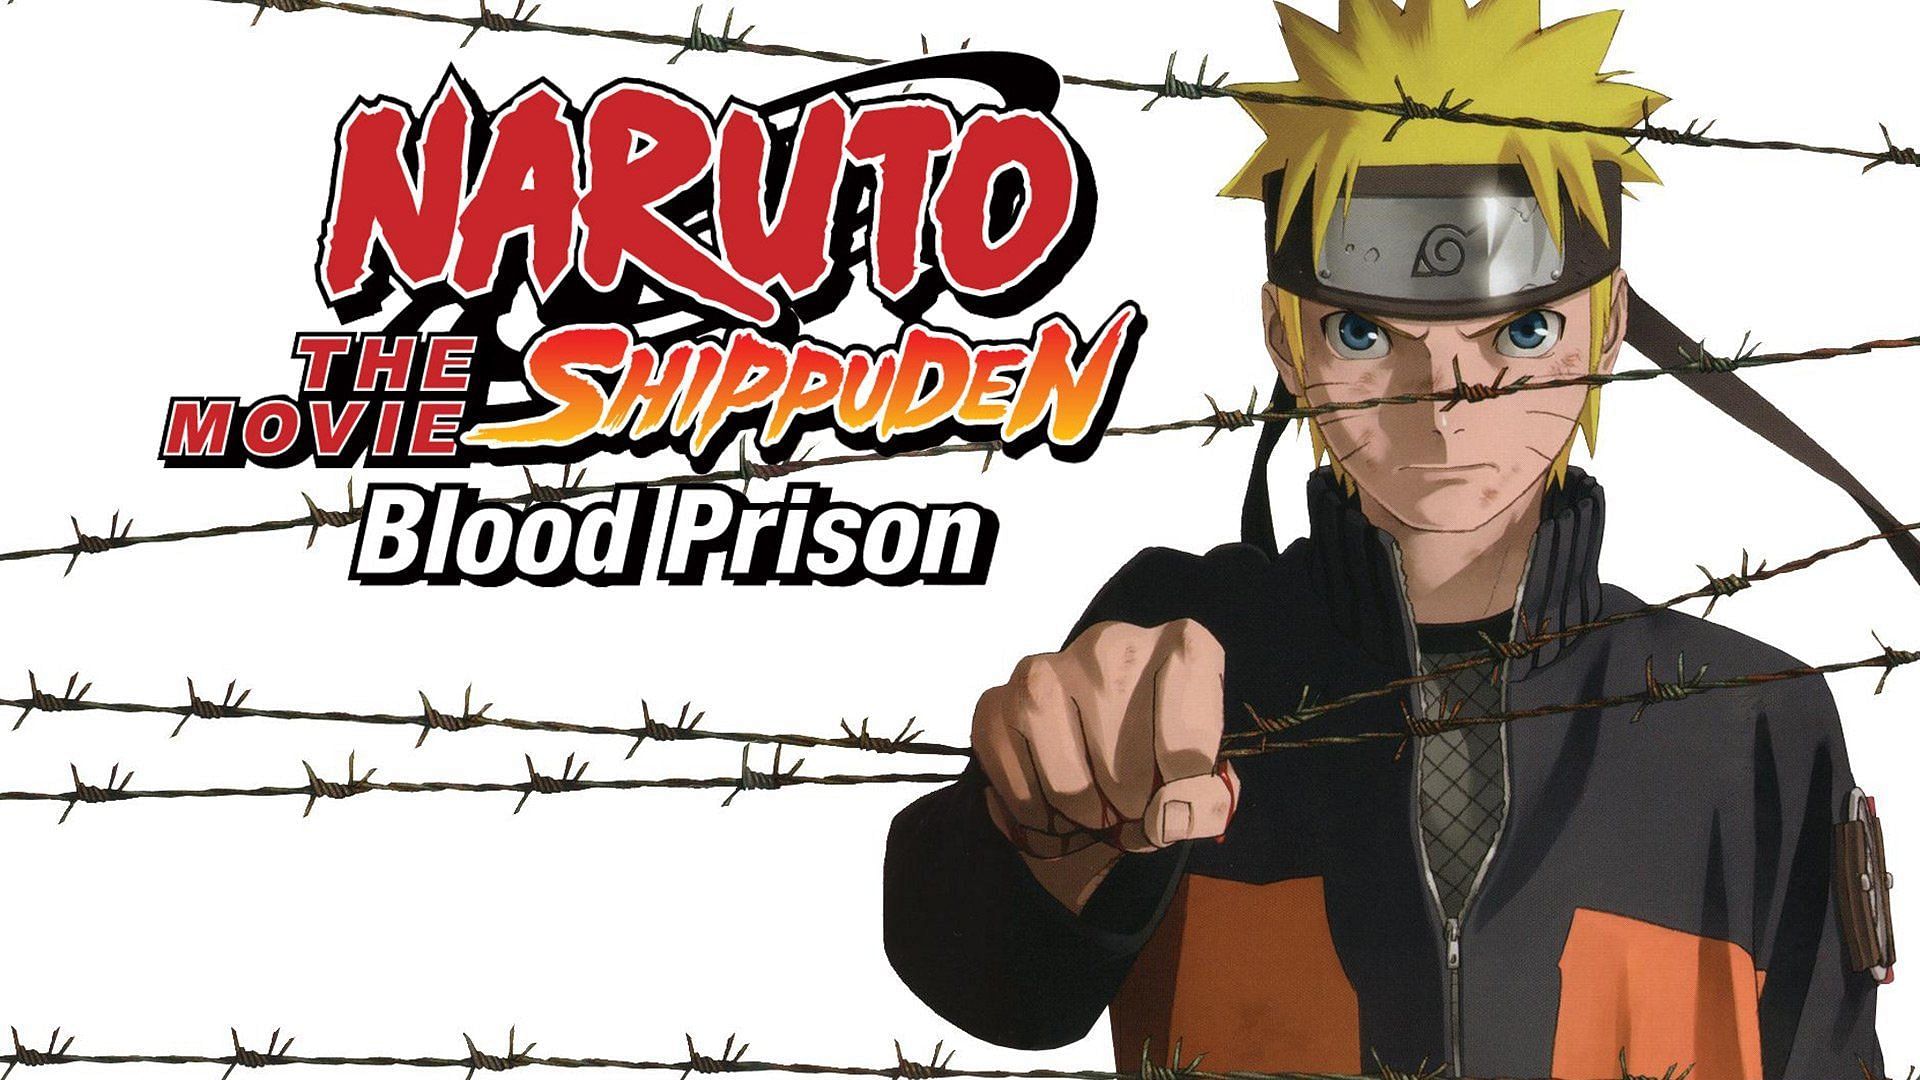 Naruto Blood Prison movie poster (Image via Studio Pierrot)